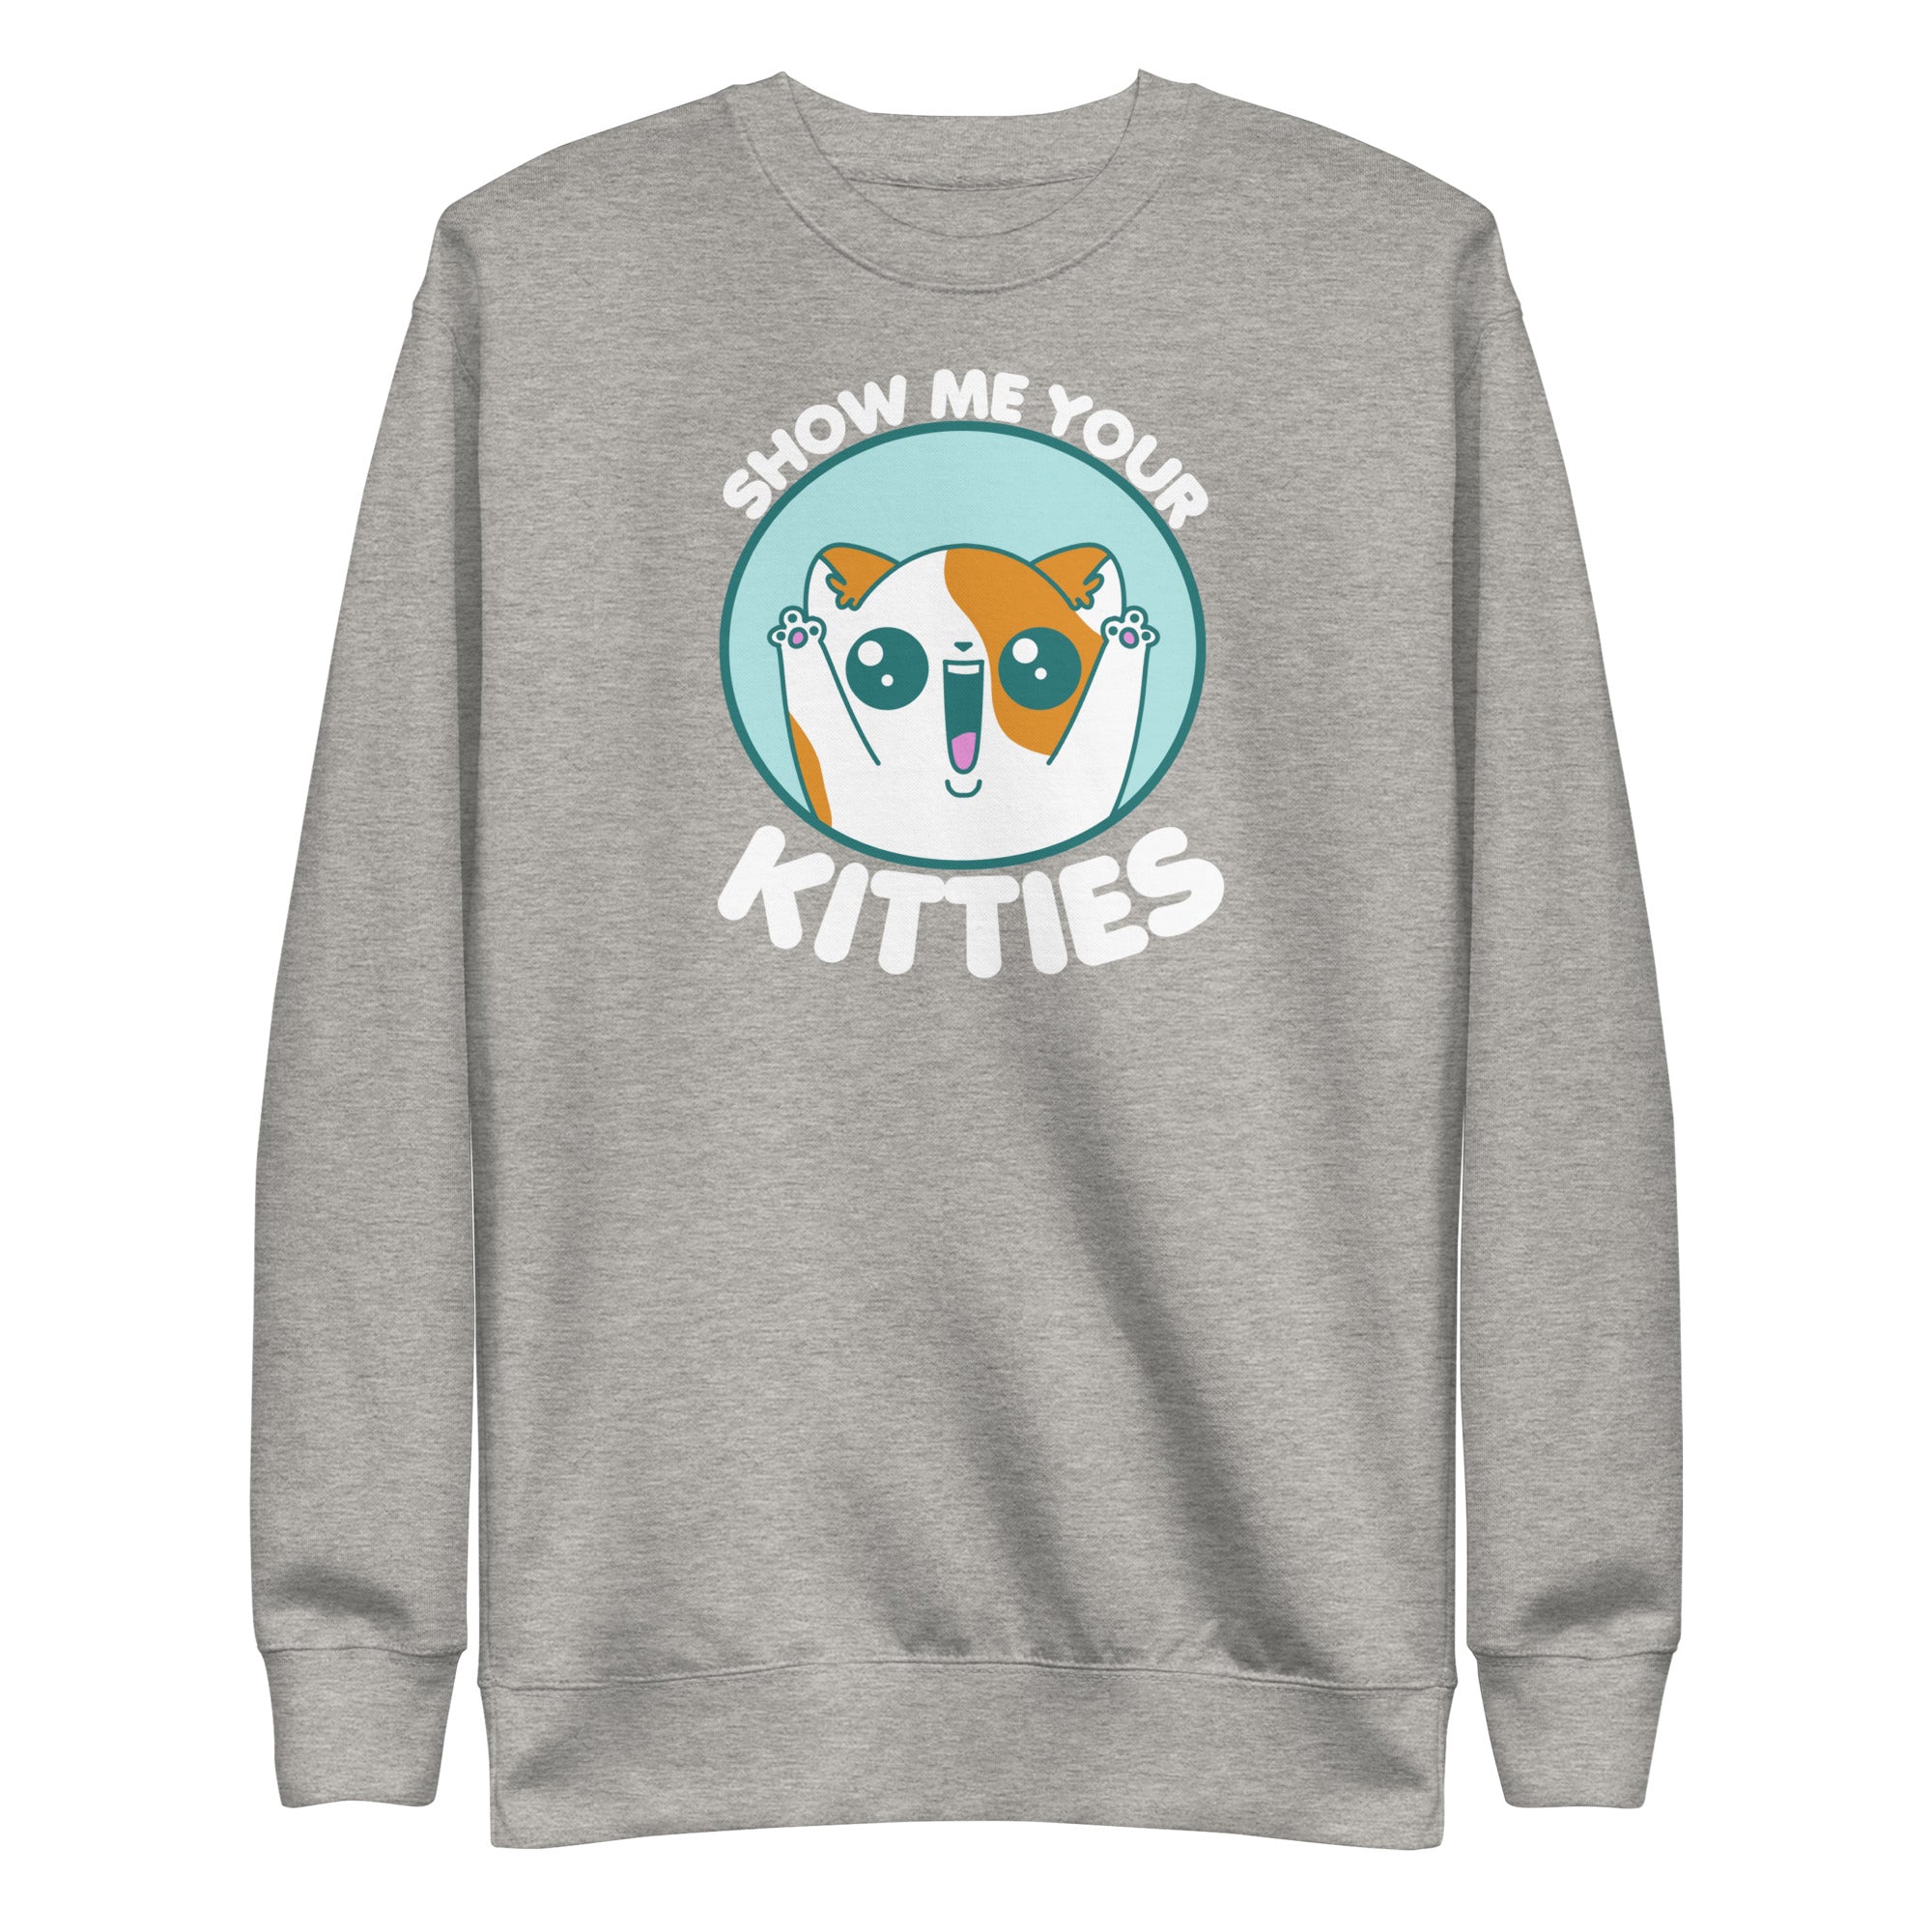 SHOW ME YOUR KITTIES - Modded Sweatshirt - ChubbleGumLLC